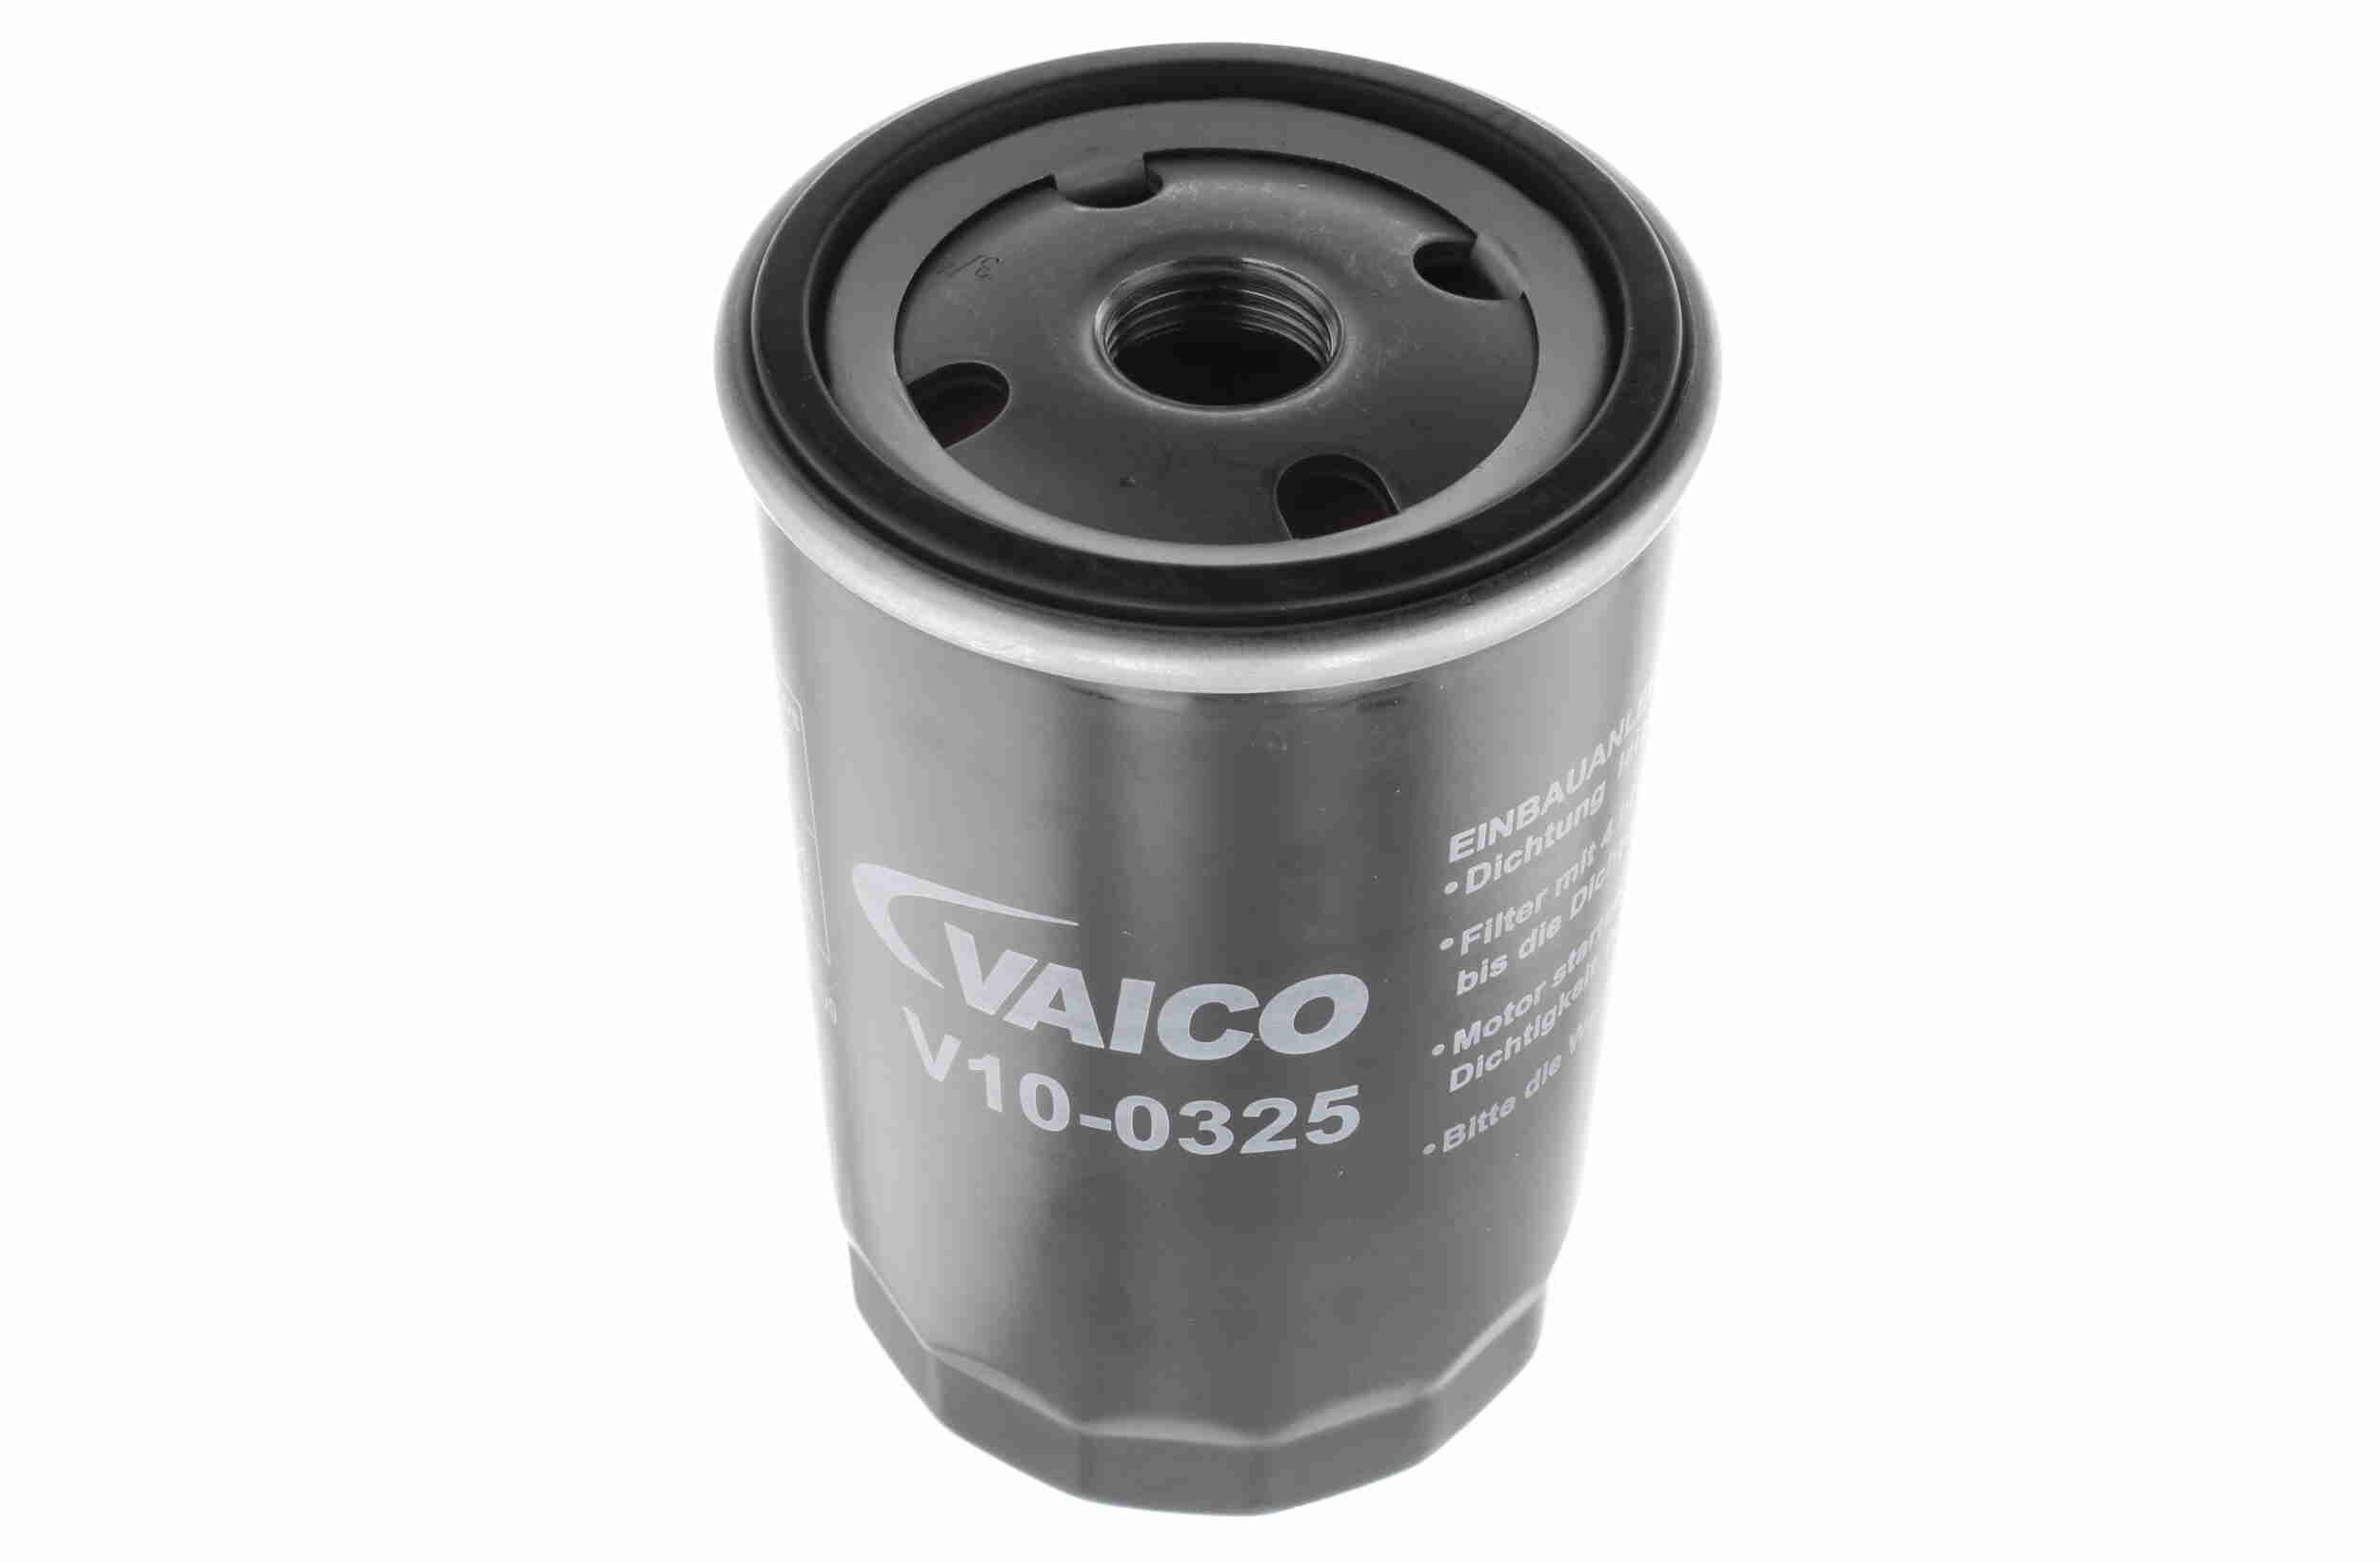 VAICO V10-0325 Oil filter 3/4-16 UNF, Original VAICO Quality, with one anti-return valve, Spin-on Filter